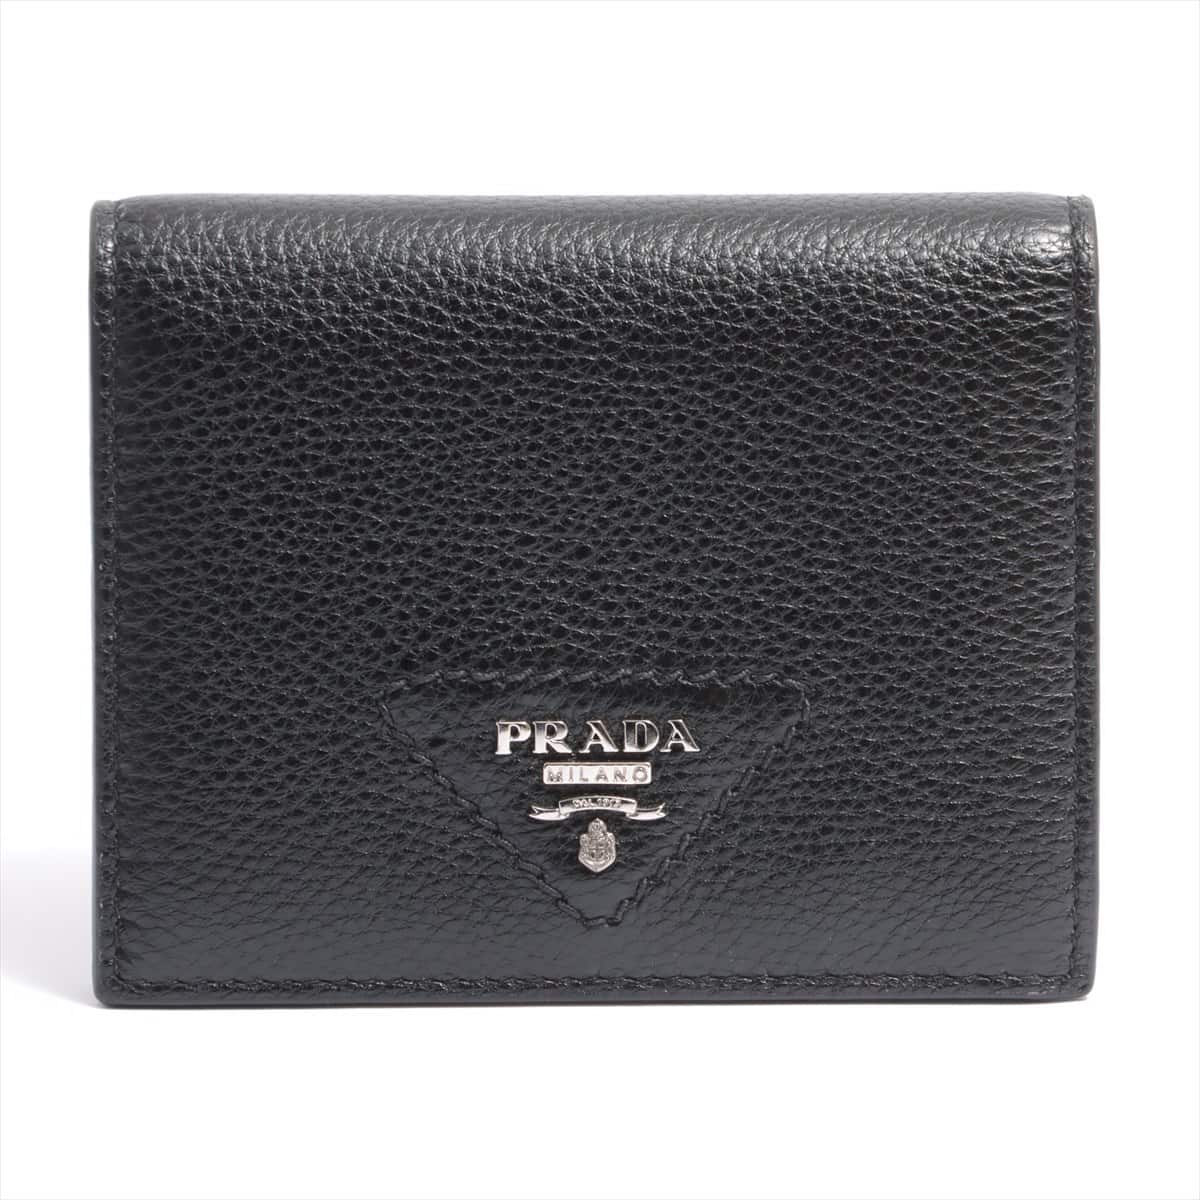 Prada 1MV204 Leather Wallet Black